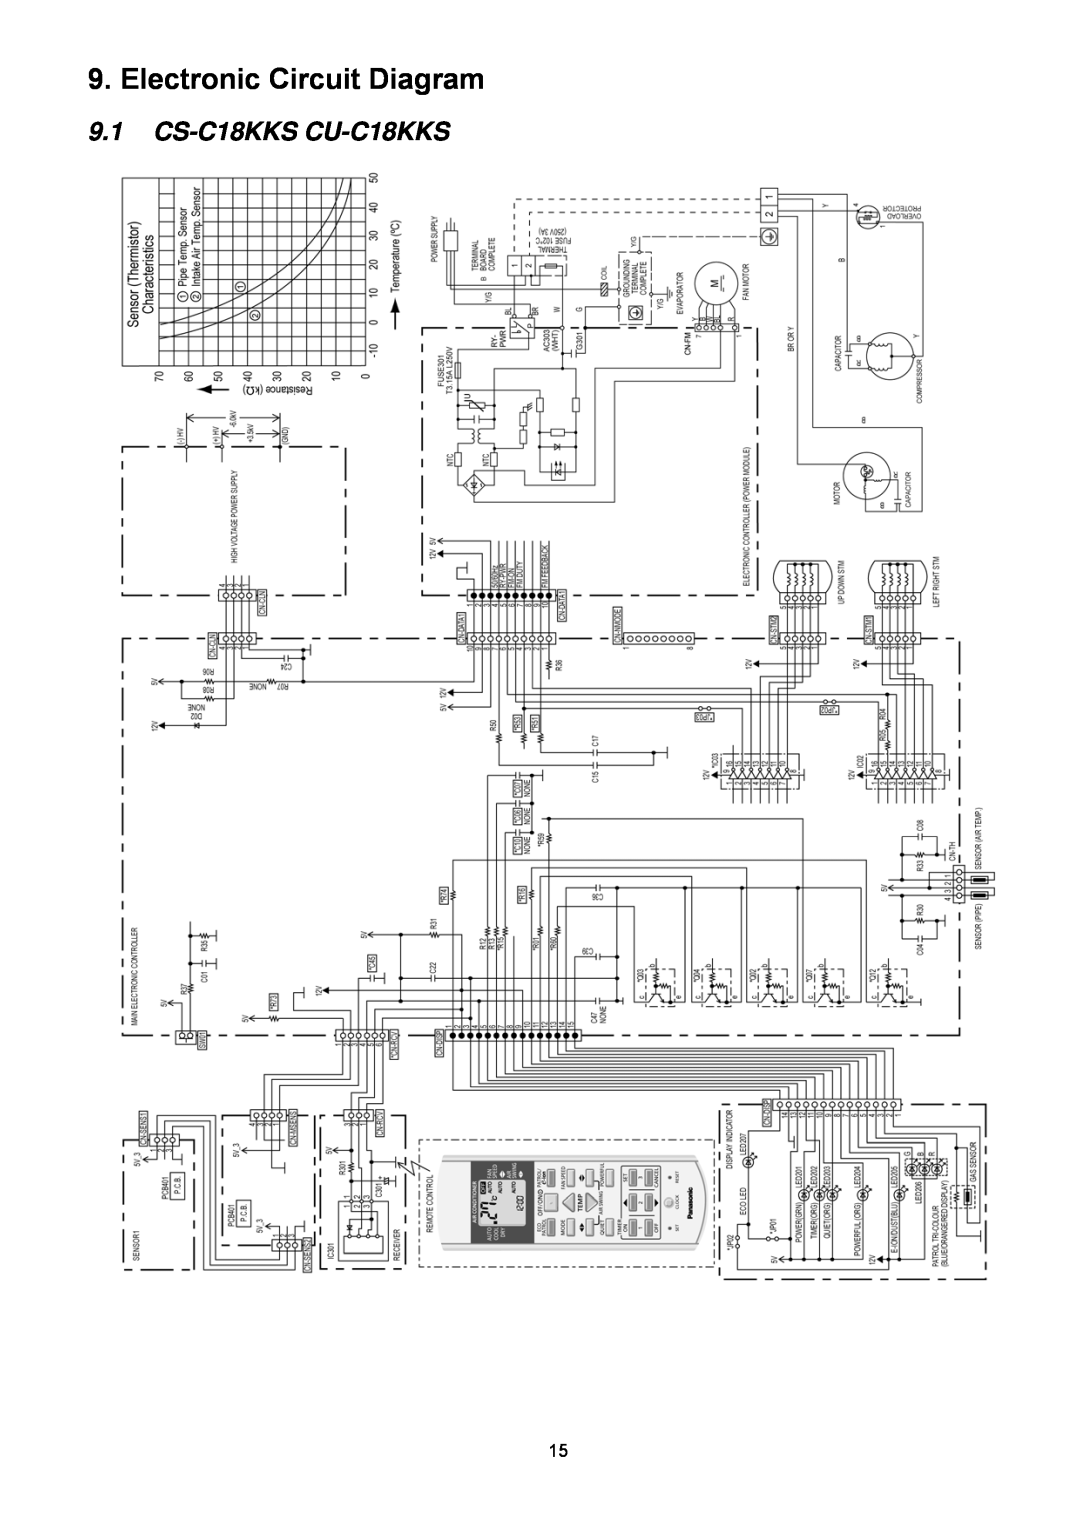 Panasonic CS-C24KKS, CU-C24KKS dimensions Electronic Circuit Diagram, 9.1CS-C18KKS CU-C18KKS 